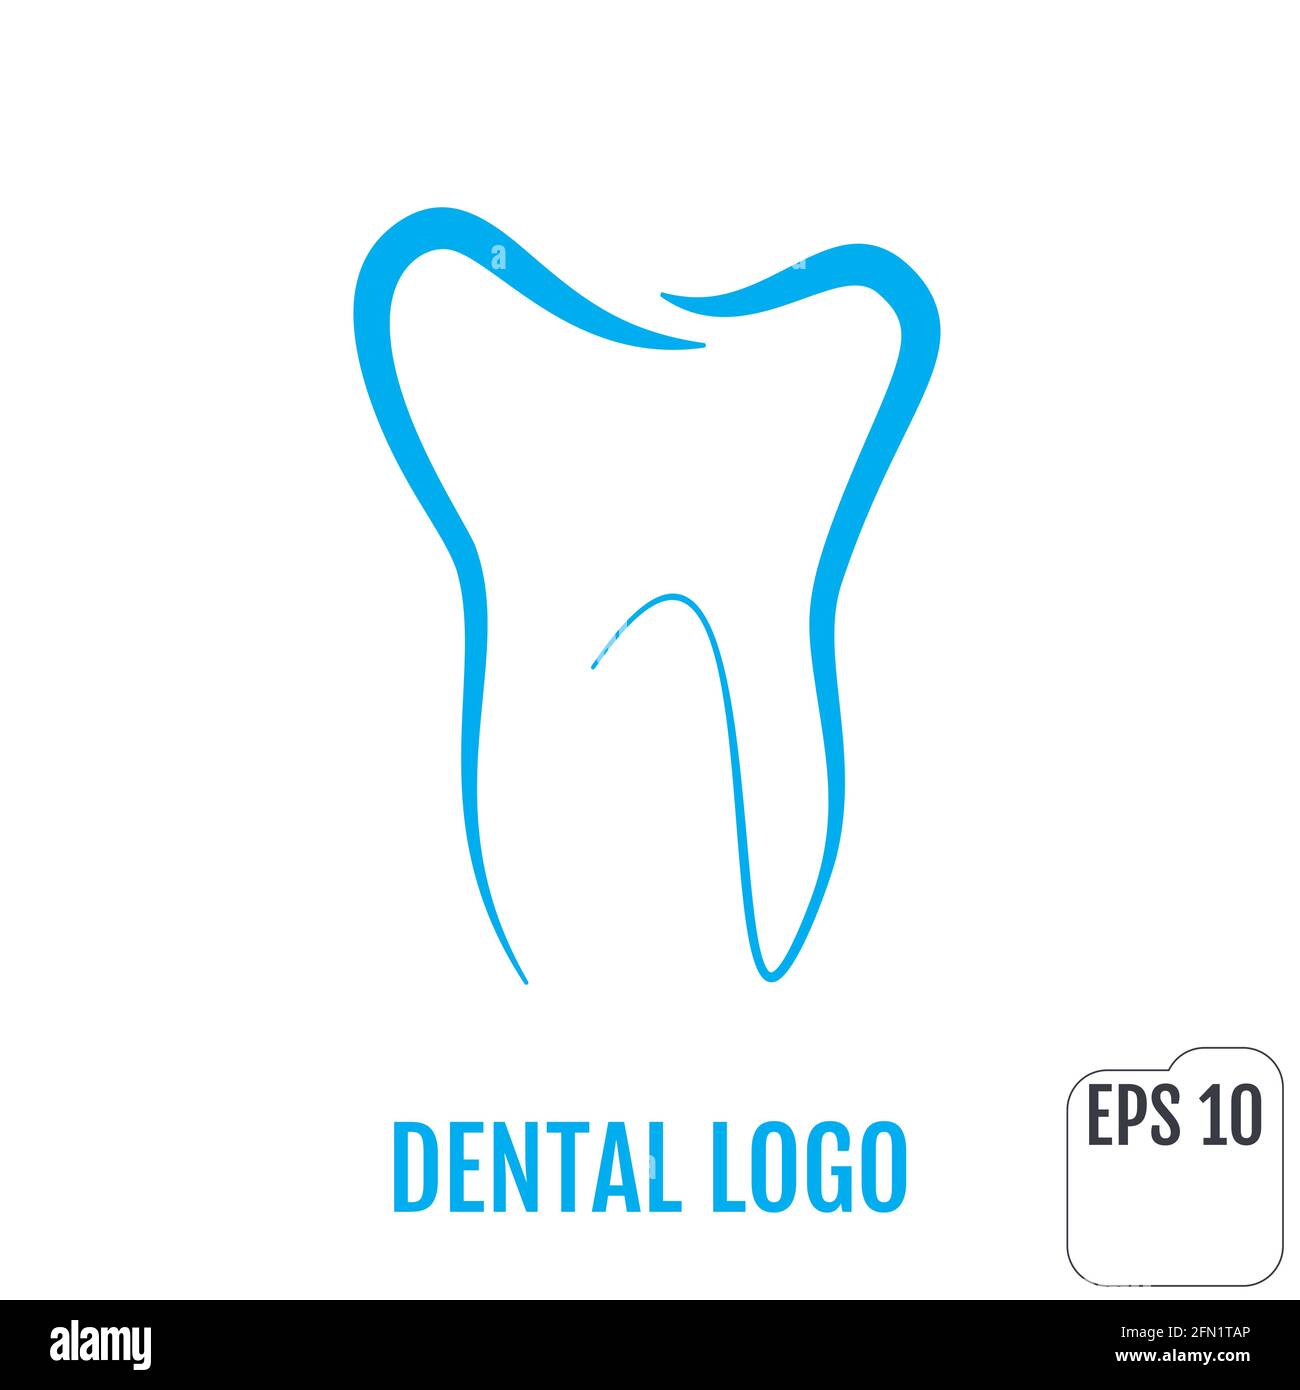 Dental logo Stock Vector Images - Alamy